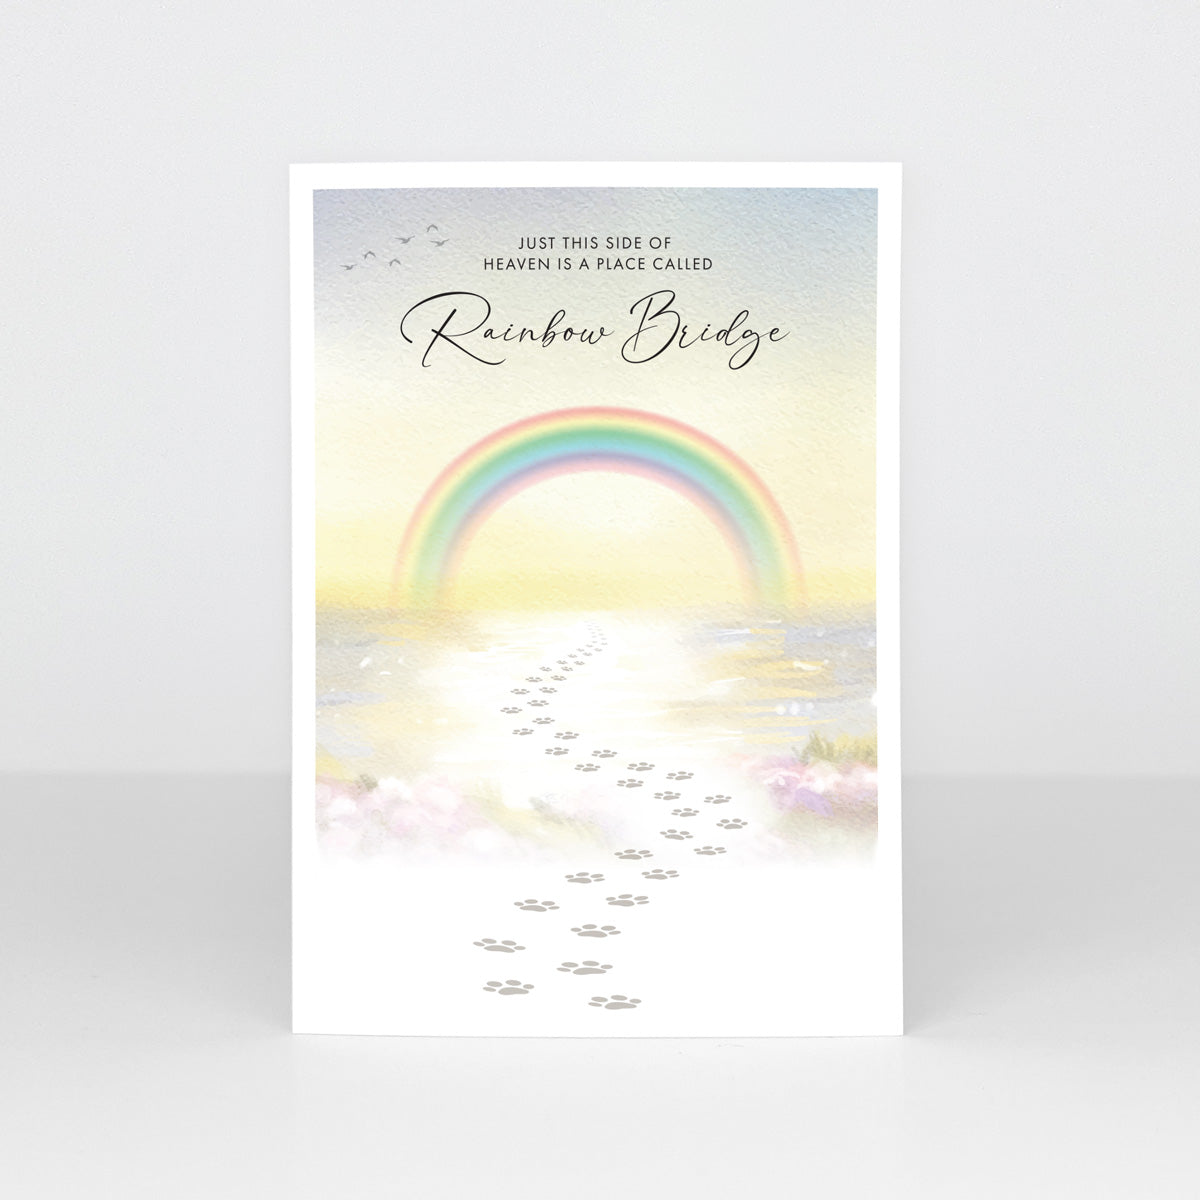 A6 Sympathy Cards - Rainbow Bridge (Pack of 20)